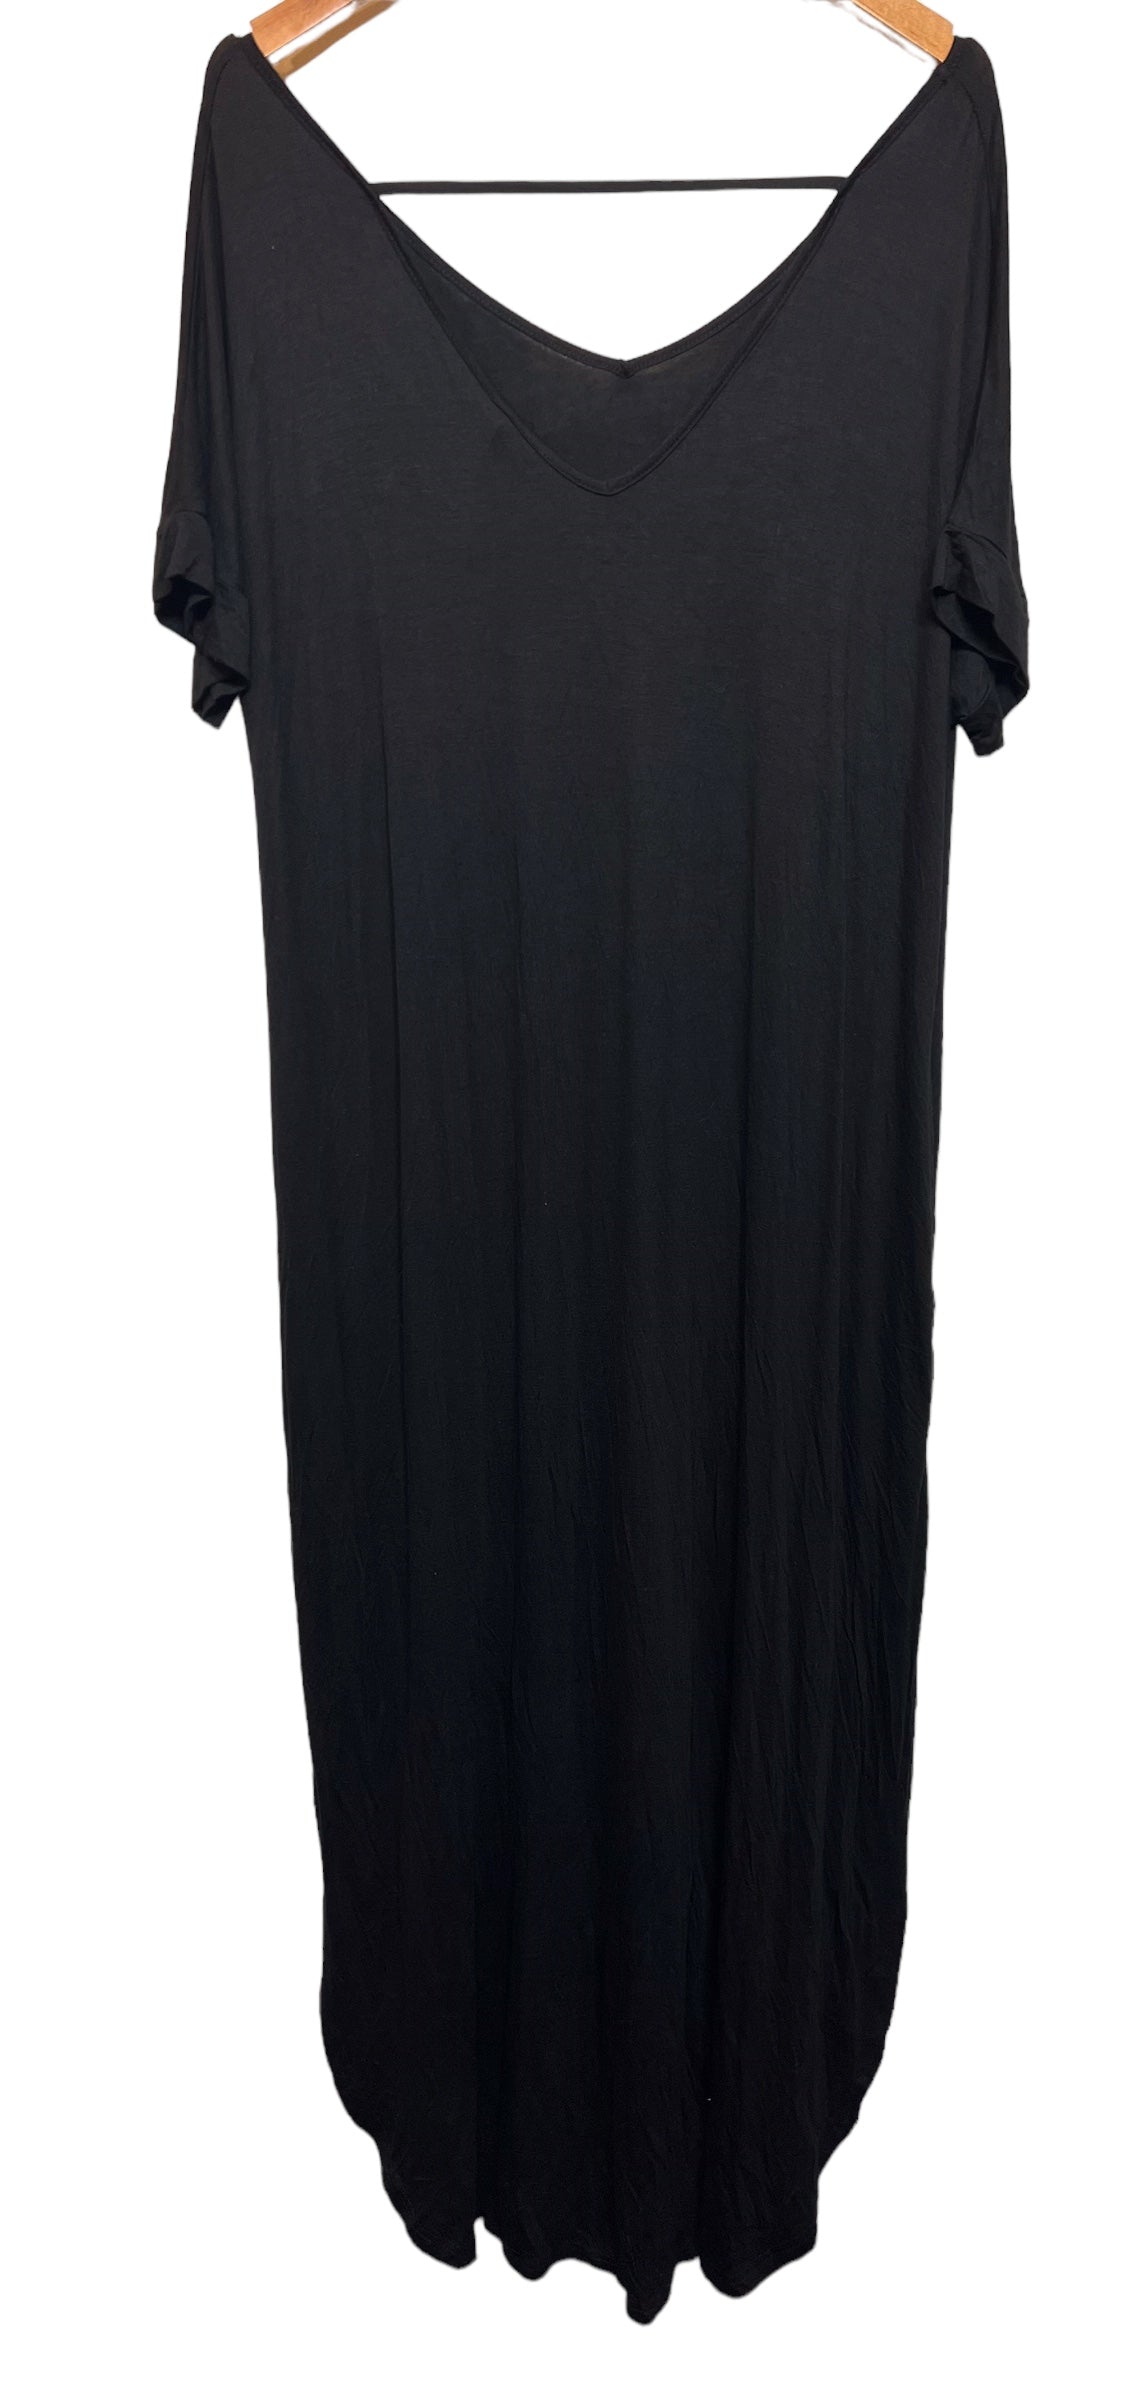 Grecerelle Black Dress (Size XL)